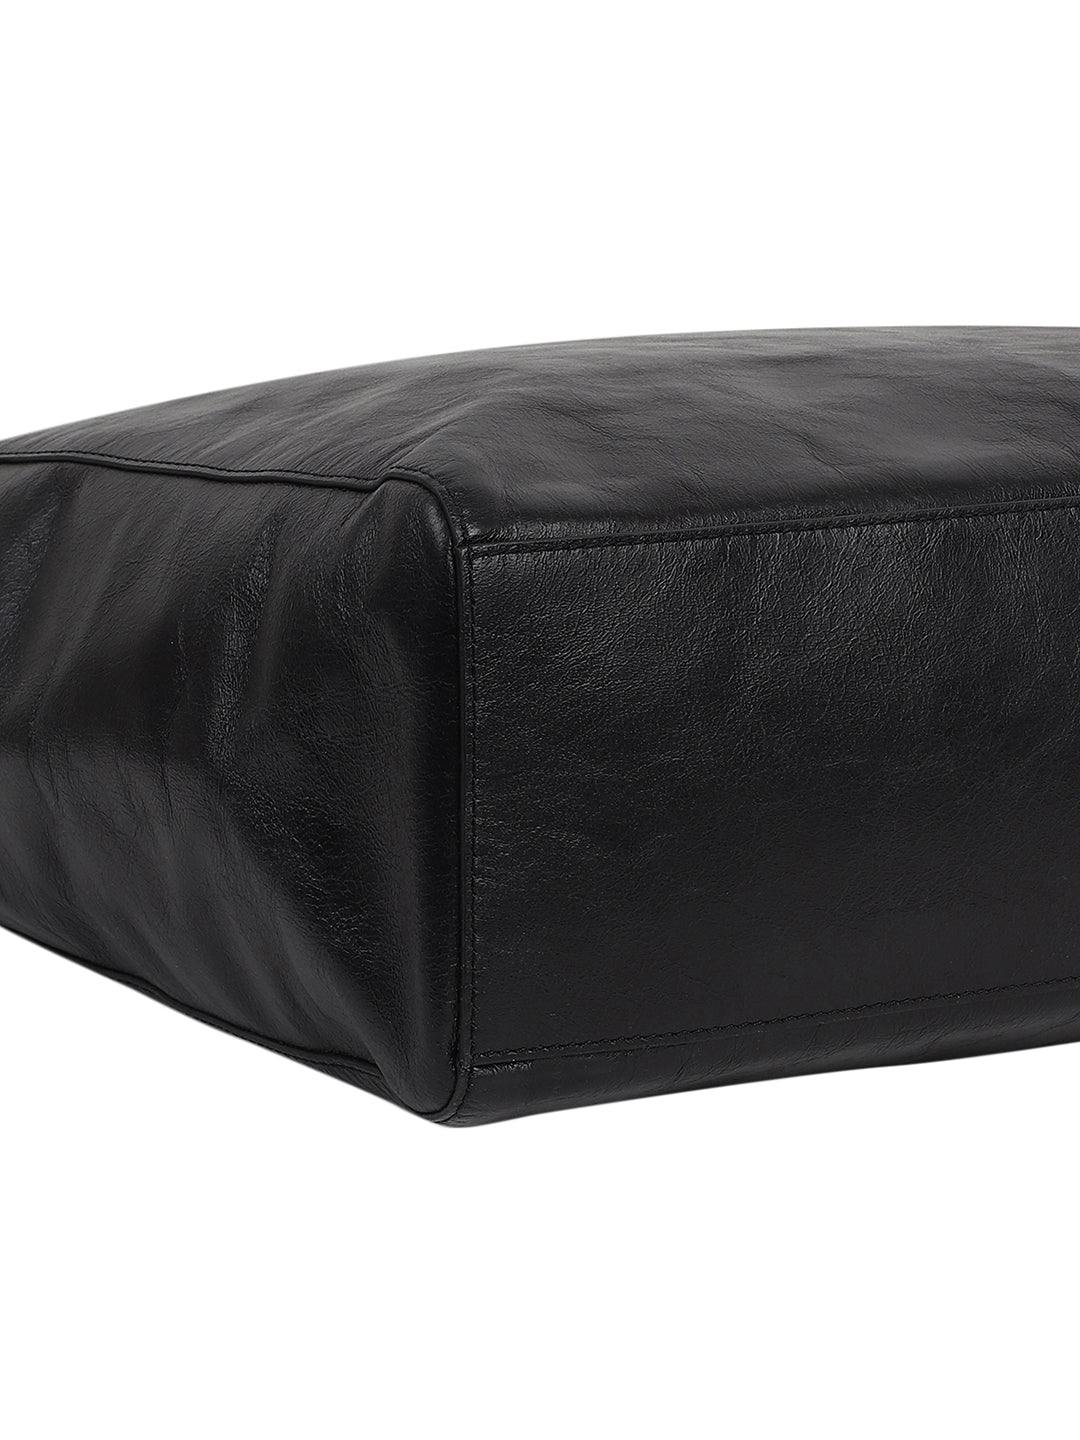 Veneto Black Leather Tote Bag